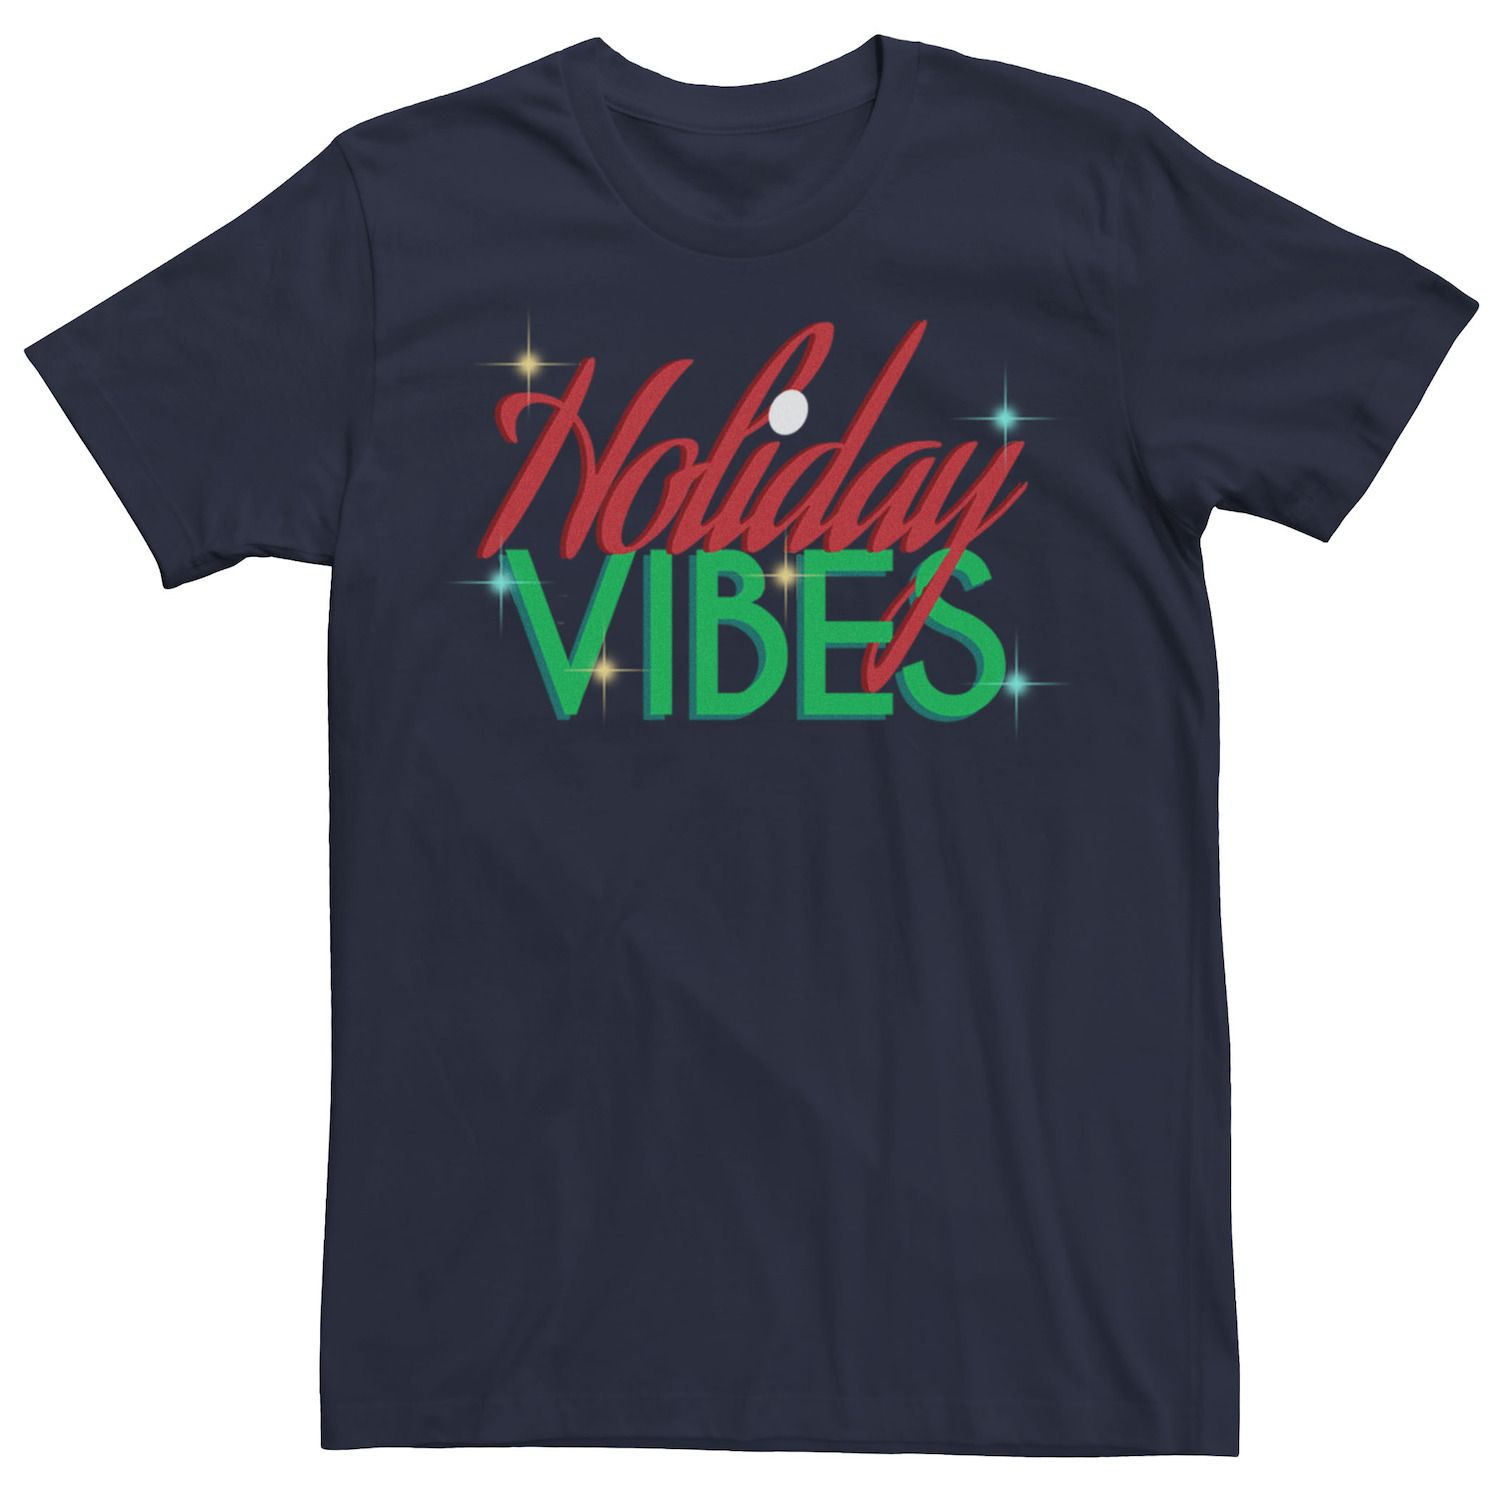 Мужская блестящая футболка с рисунком Holiday Vibes Licensed Character